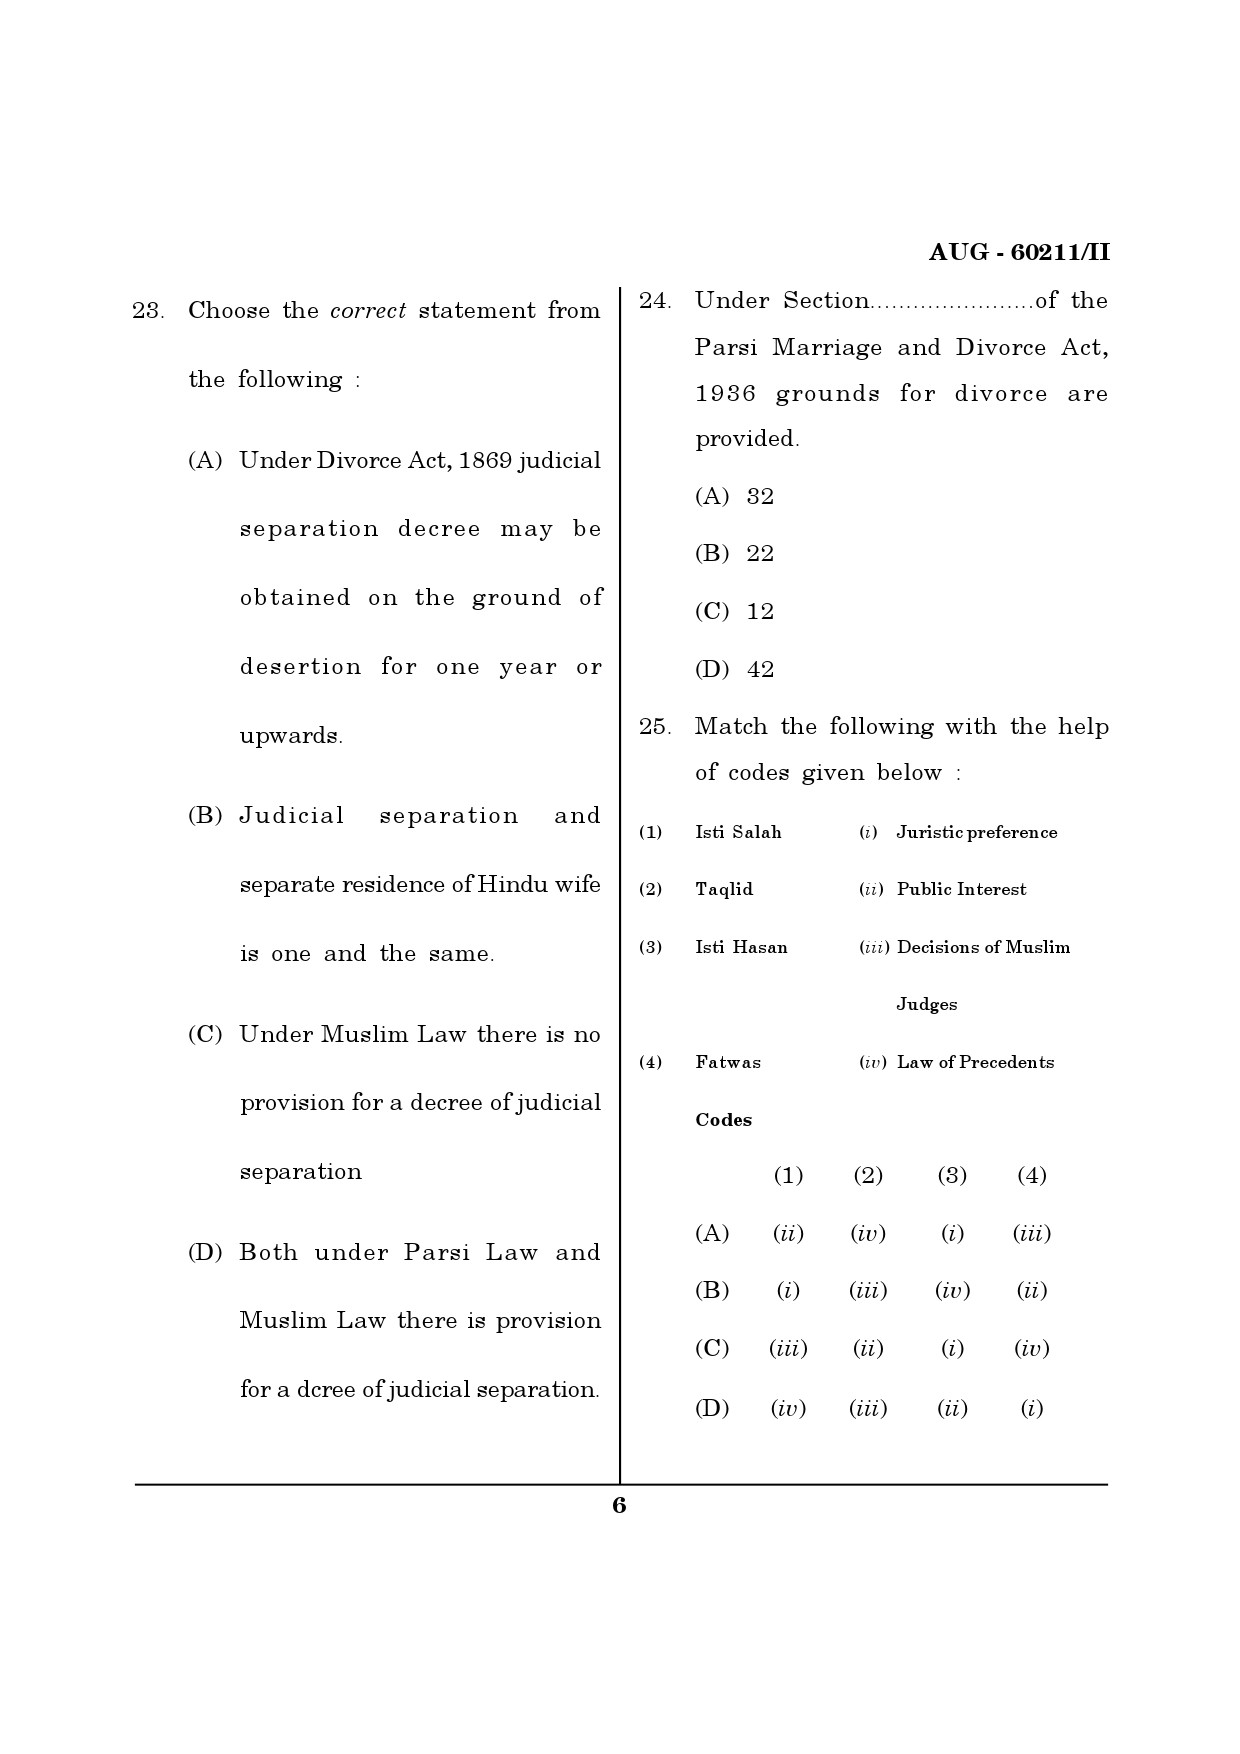 Maharashtra SET Law Question Paper II August 2011 6